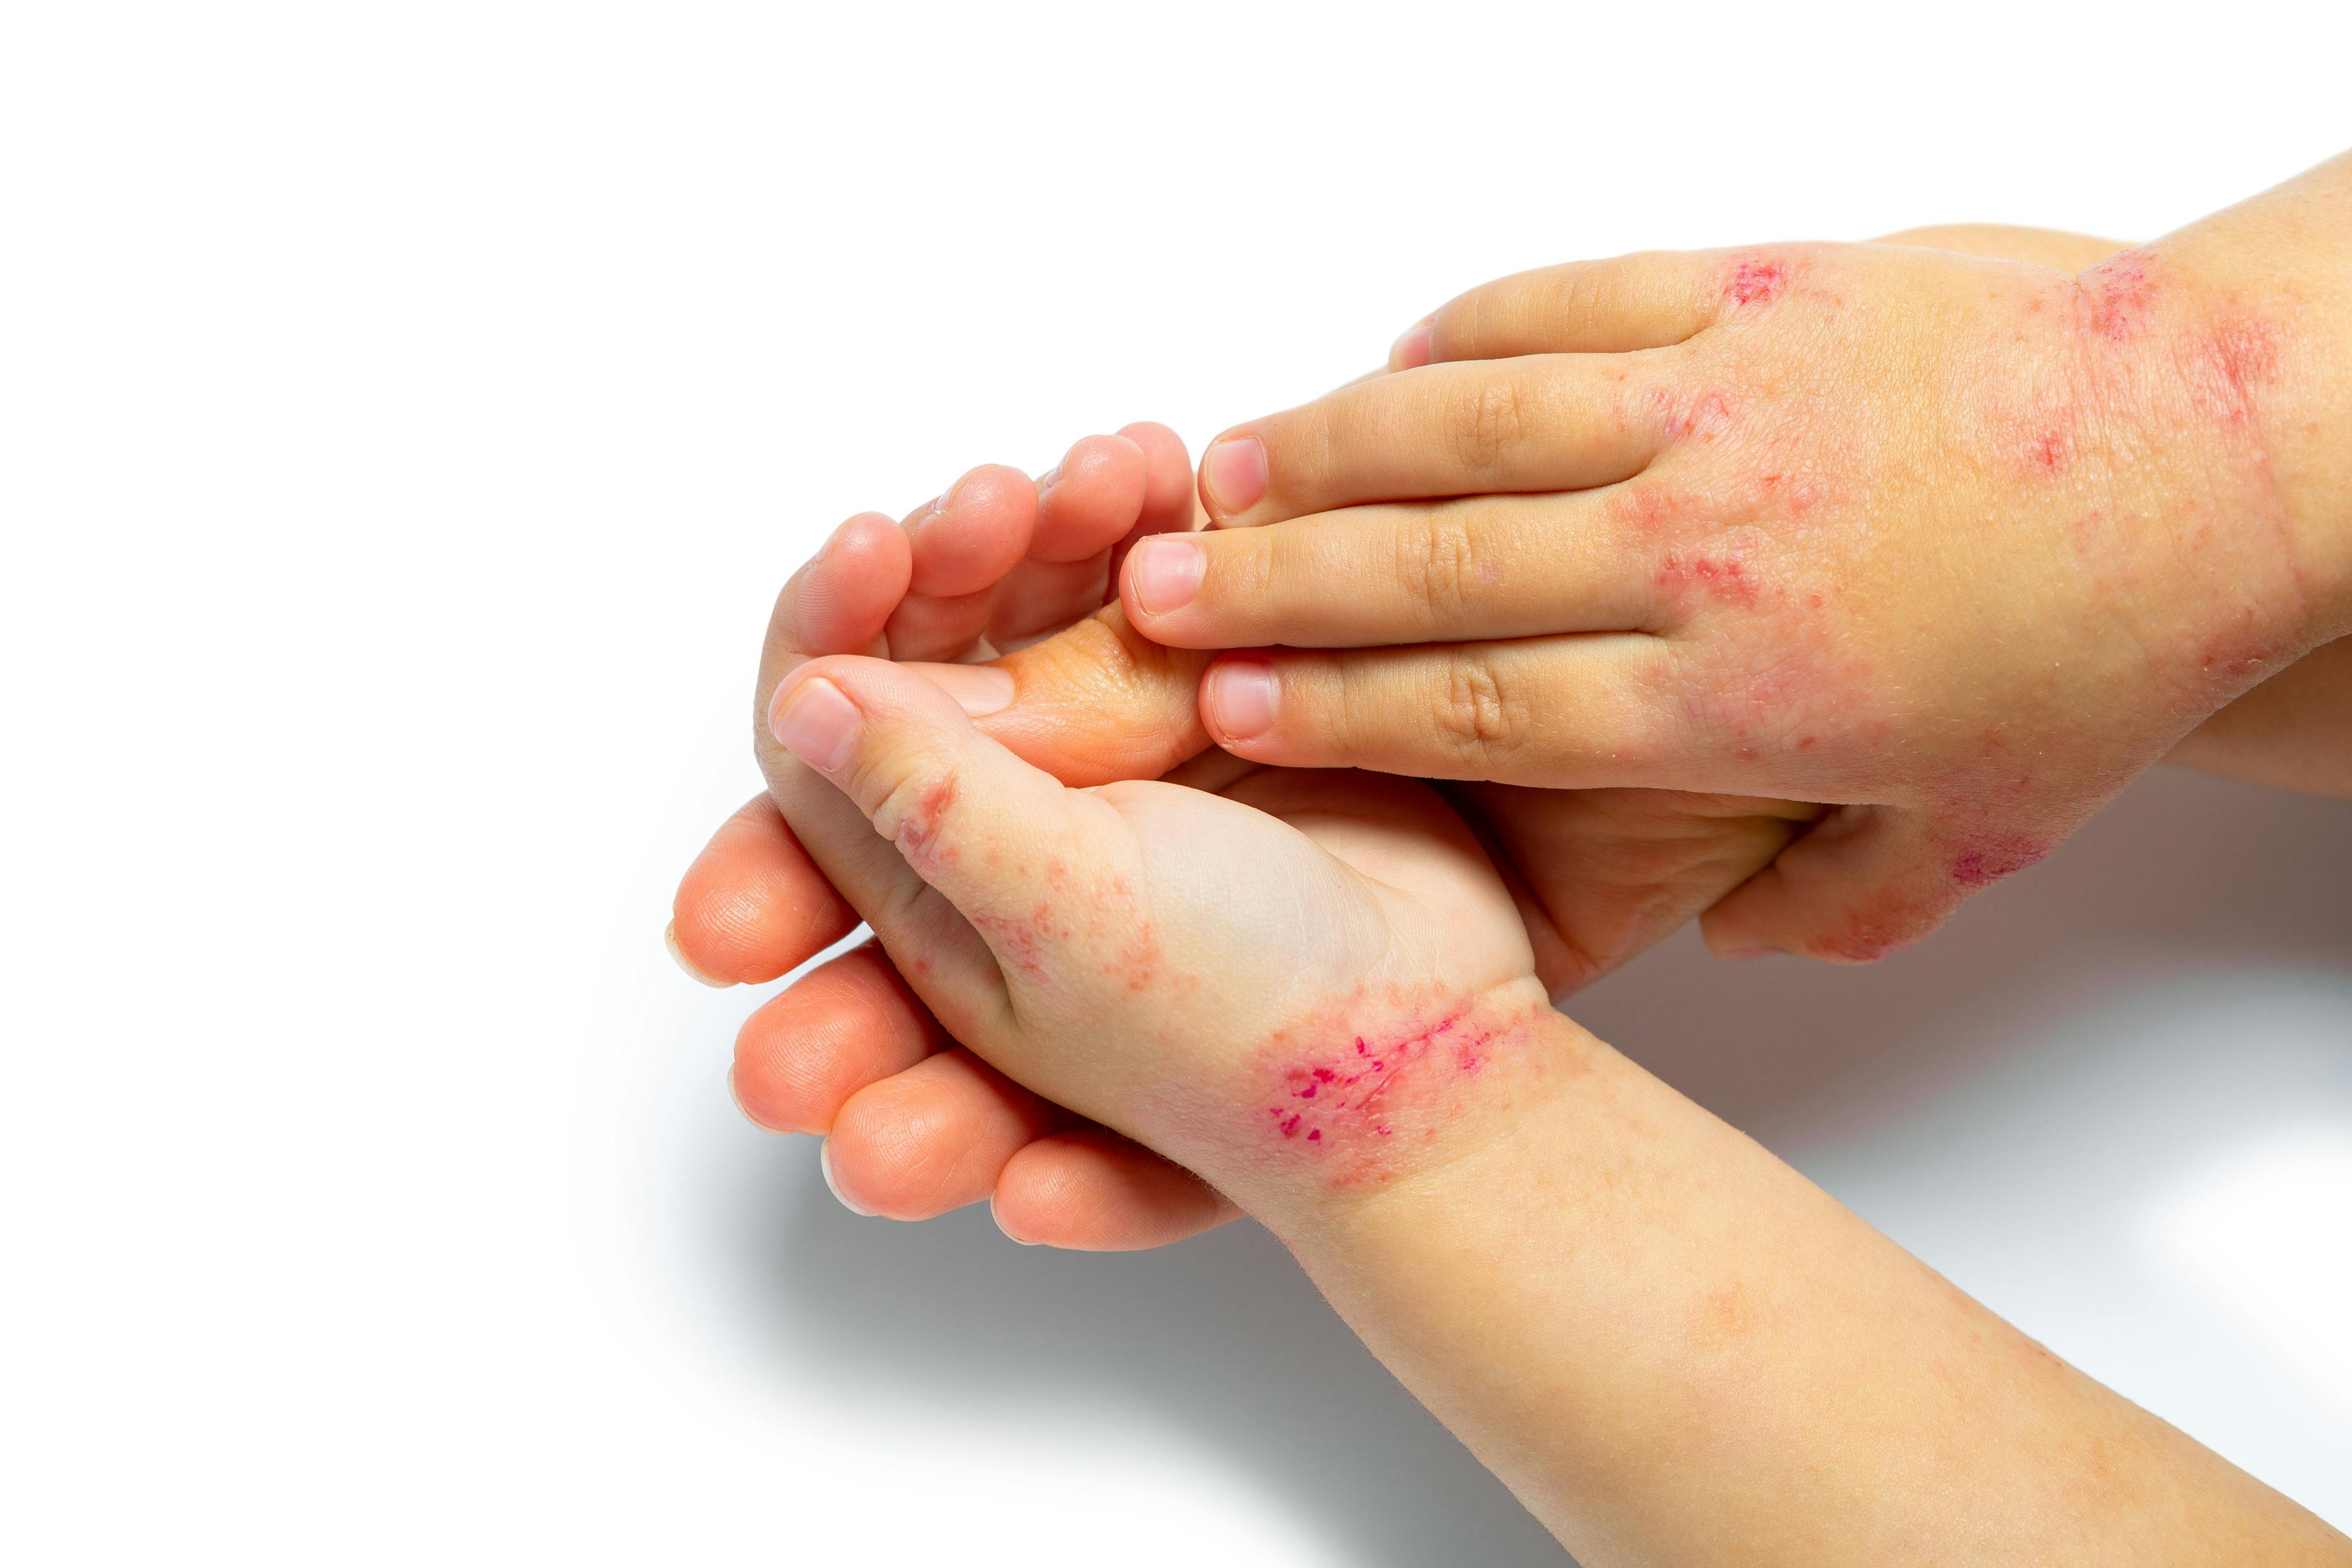 Child's hand with psoriasis | Imaged credit: Ruslan Ivantsov - stock.adobe.com